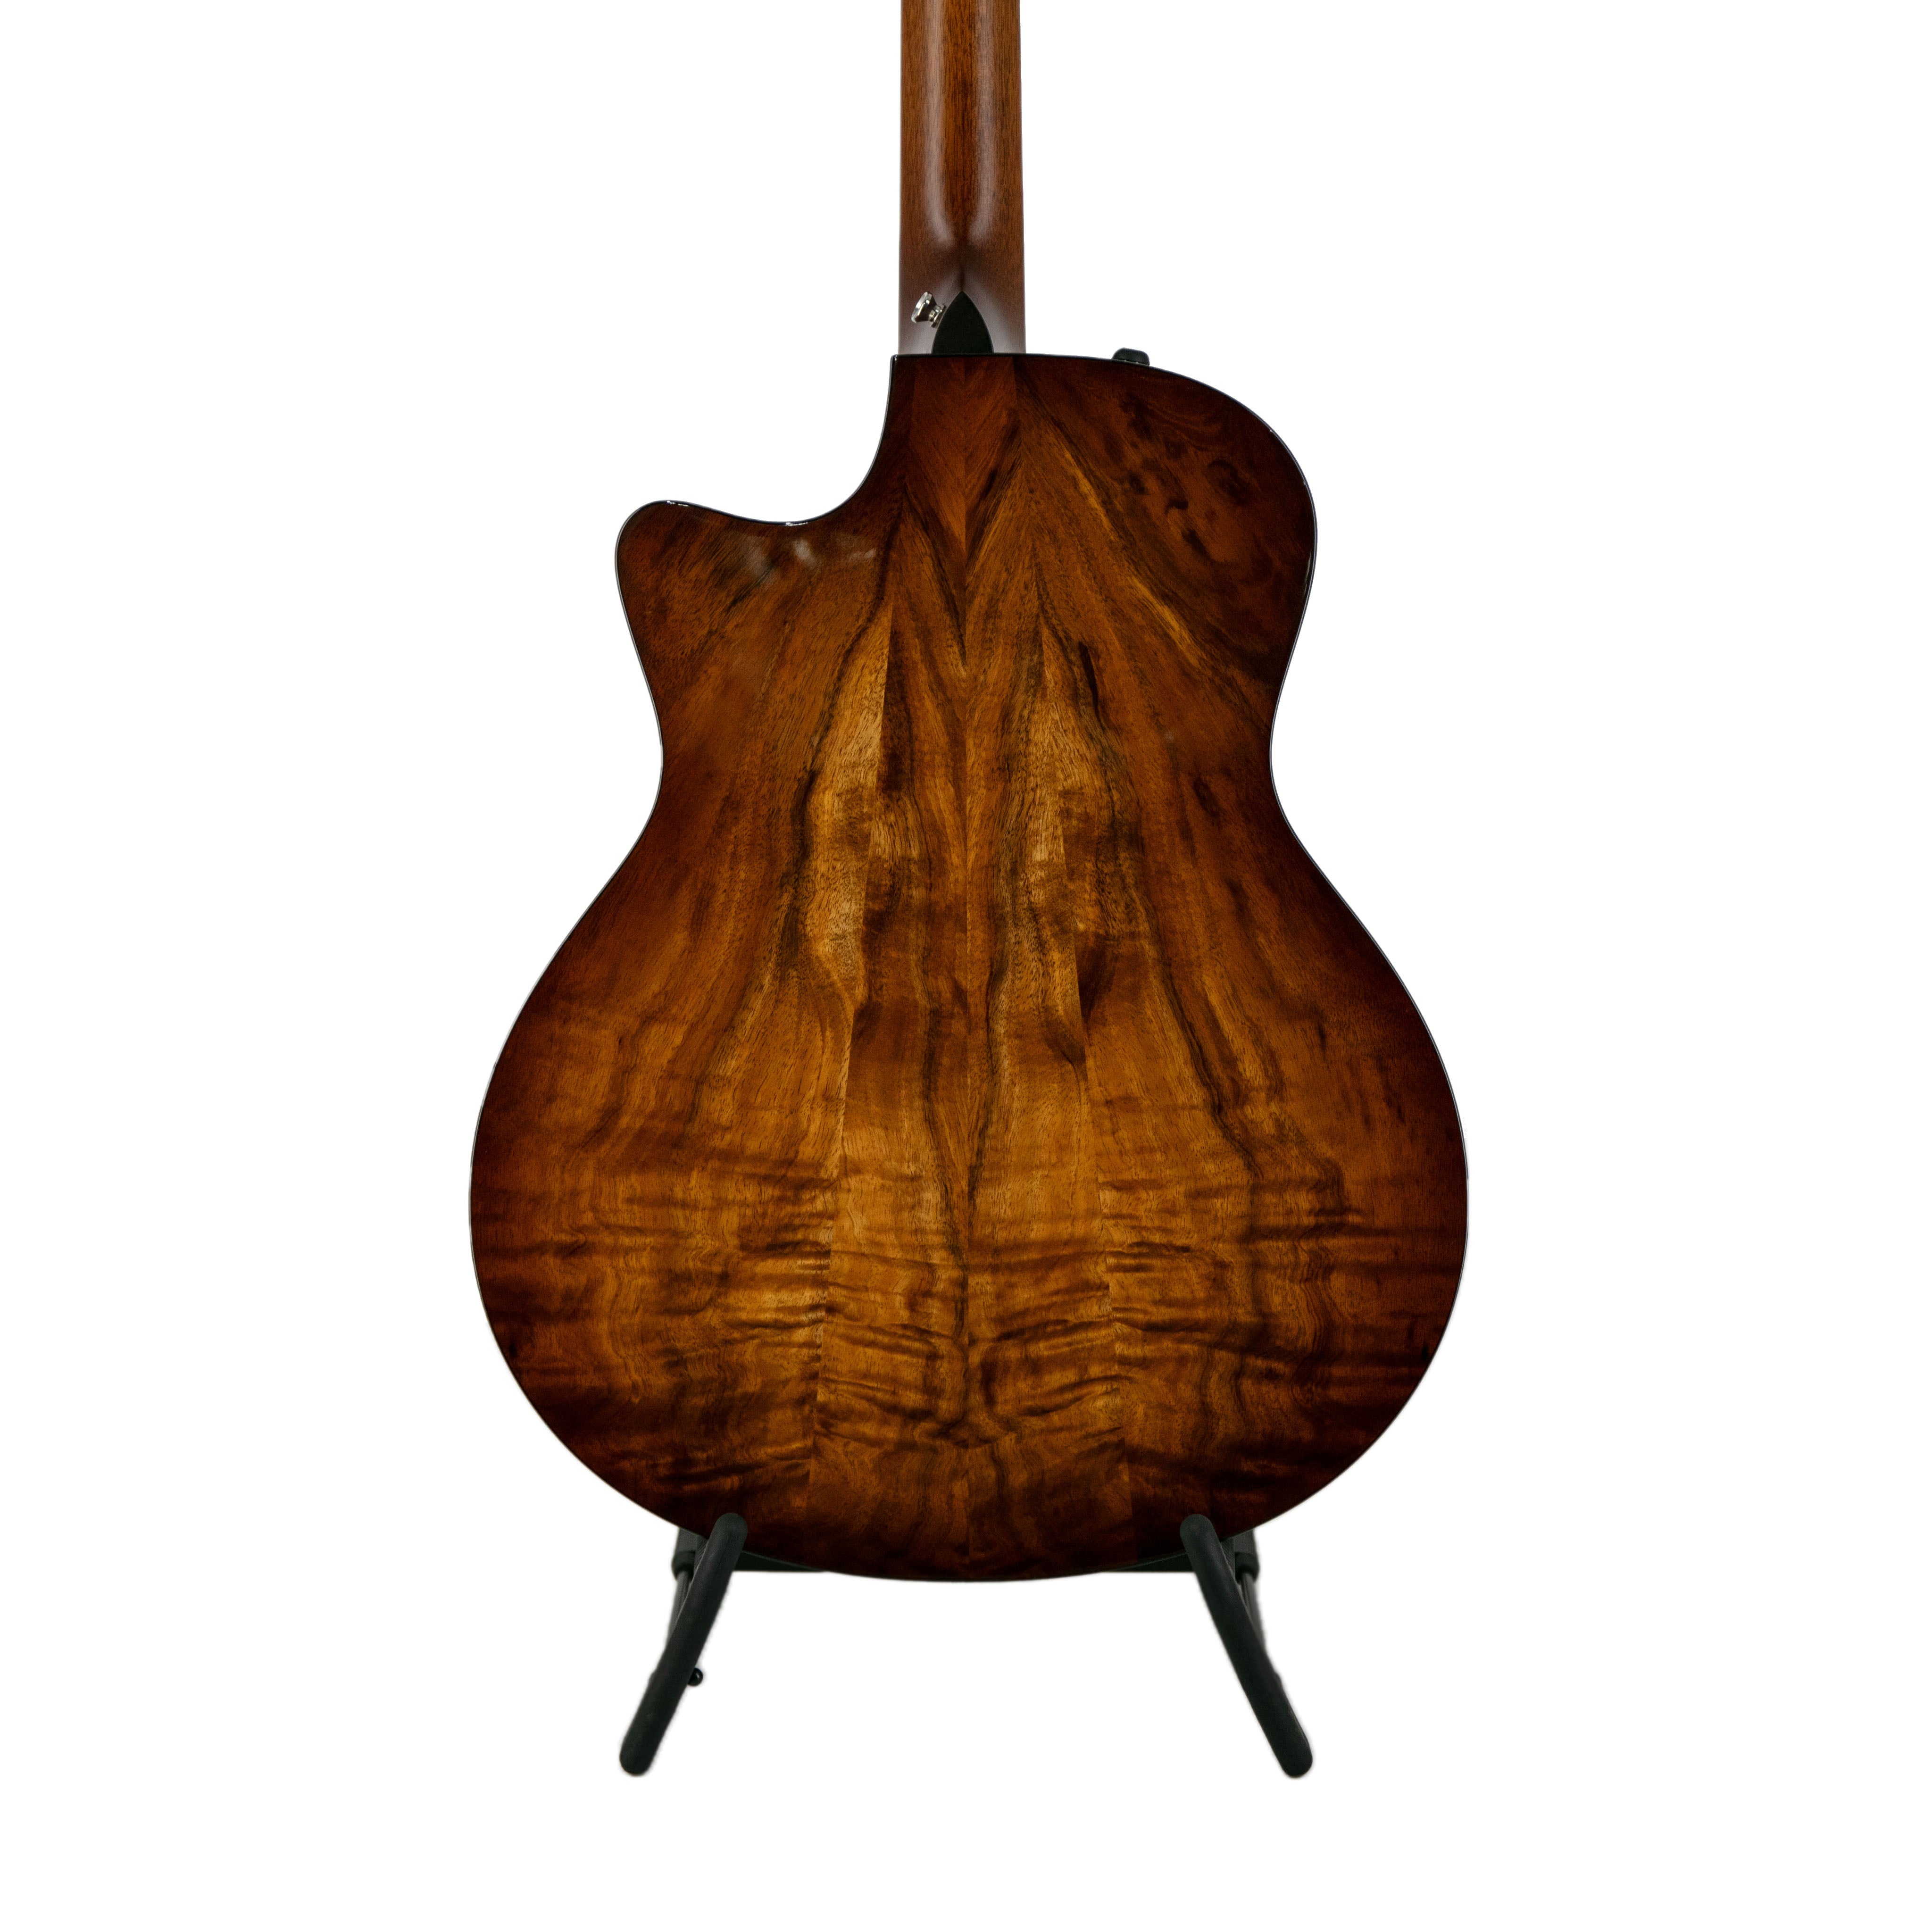 Taylor GSce-LTD 8-String Acoustic-Electric Guitar